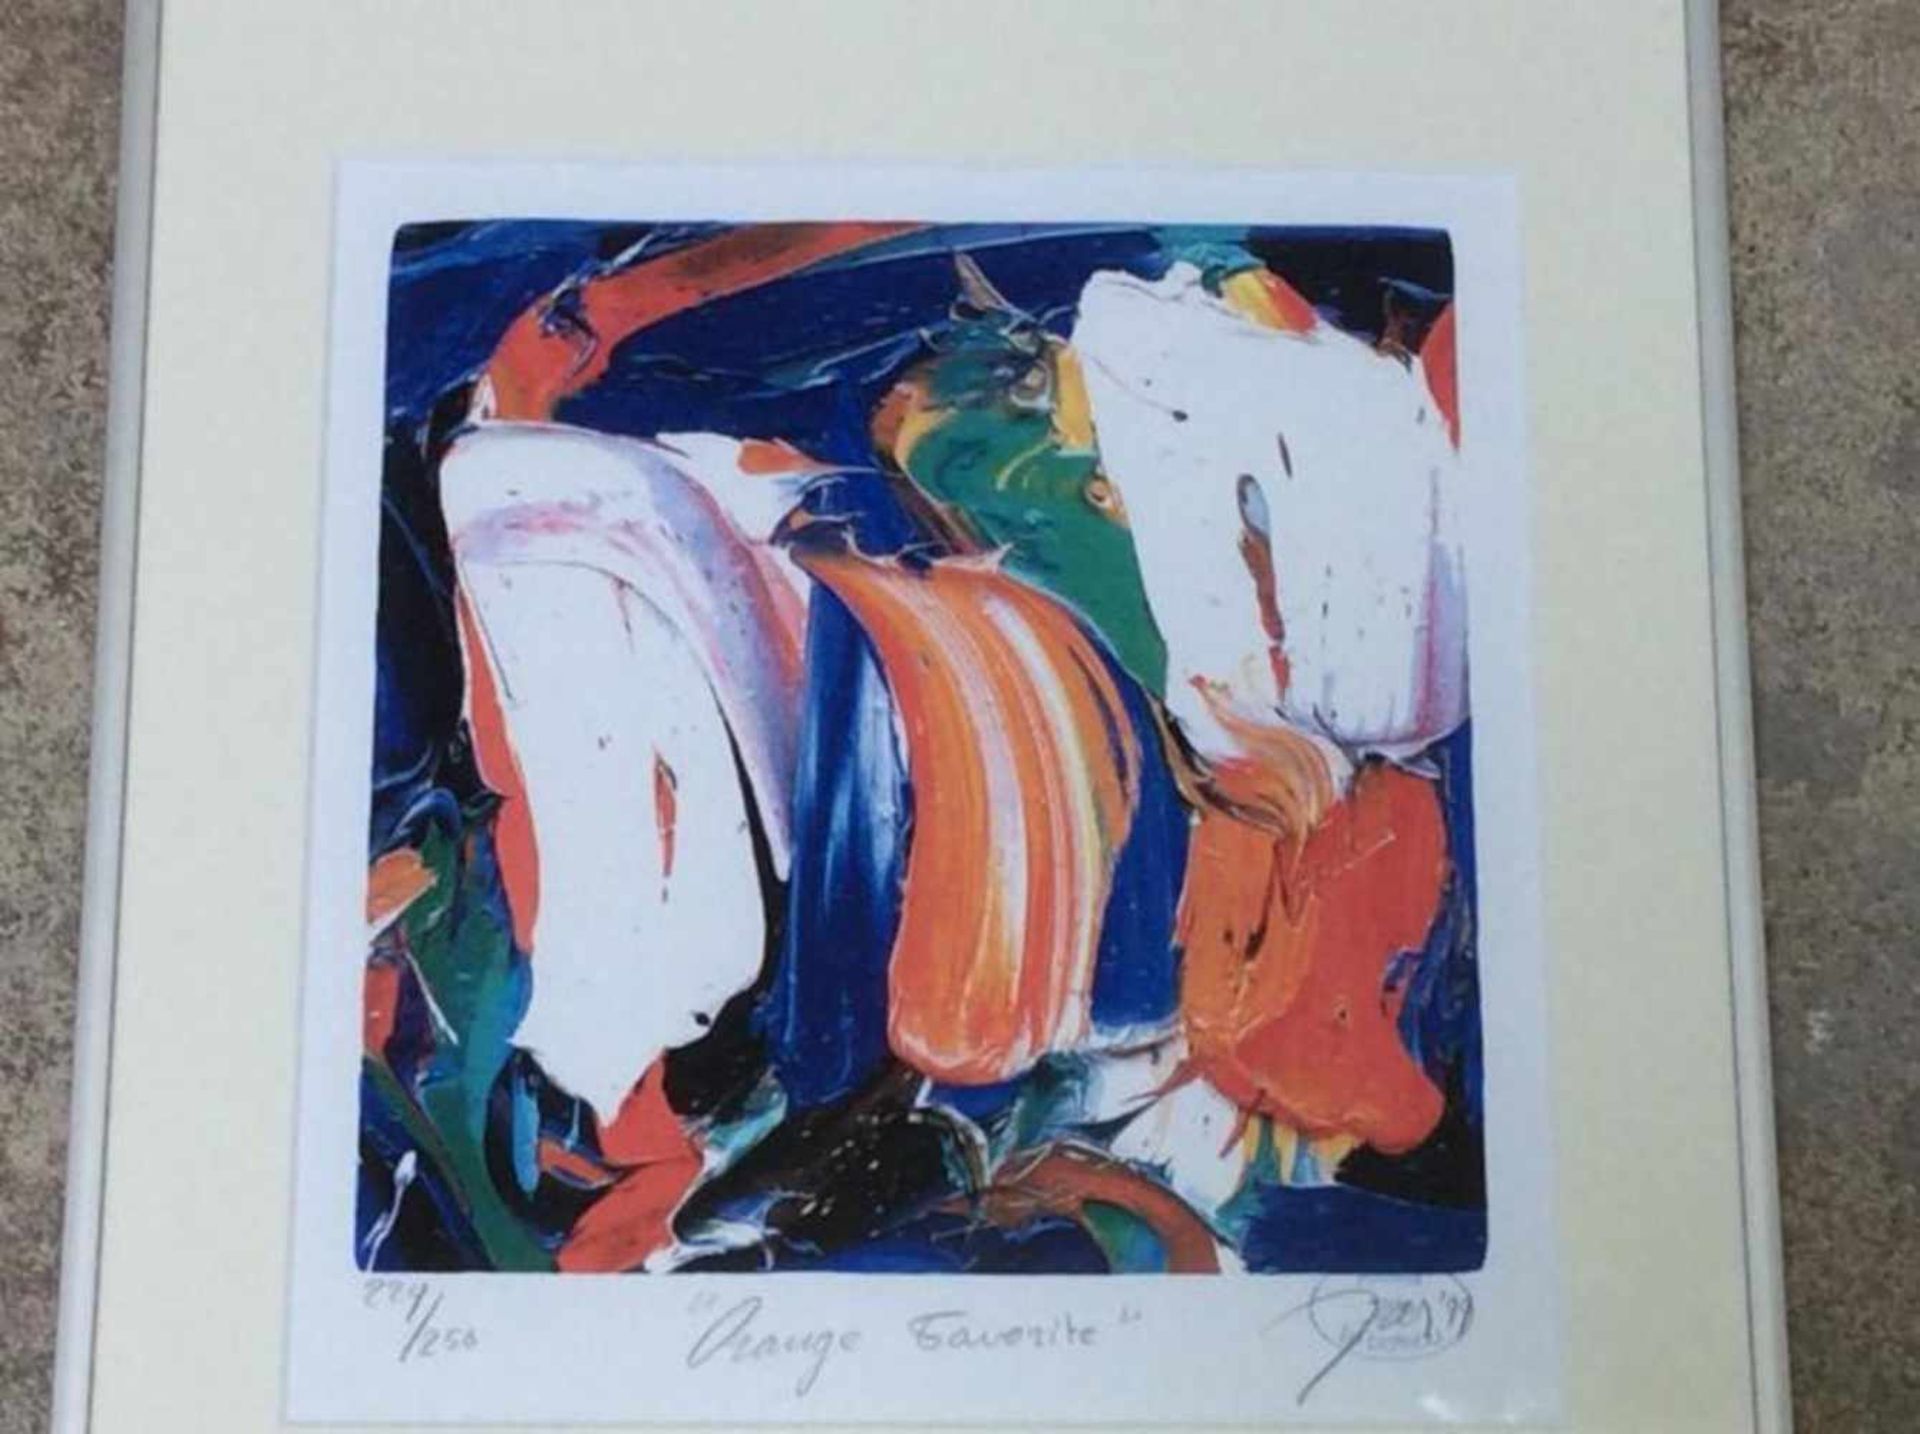 Jas 'Orange is my favourite' lithografie, ges. en gedat.'99, 229/250, 32x30cm